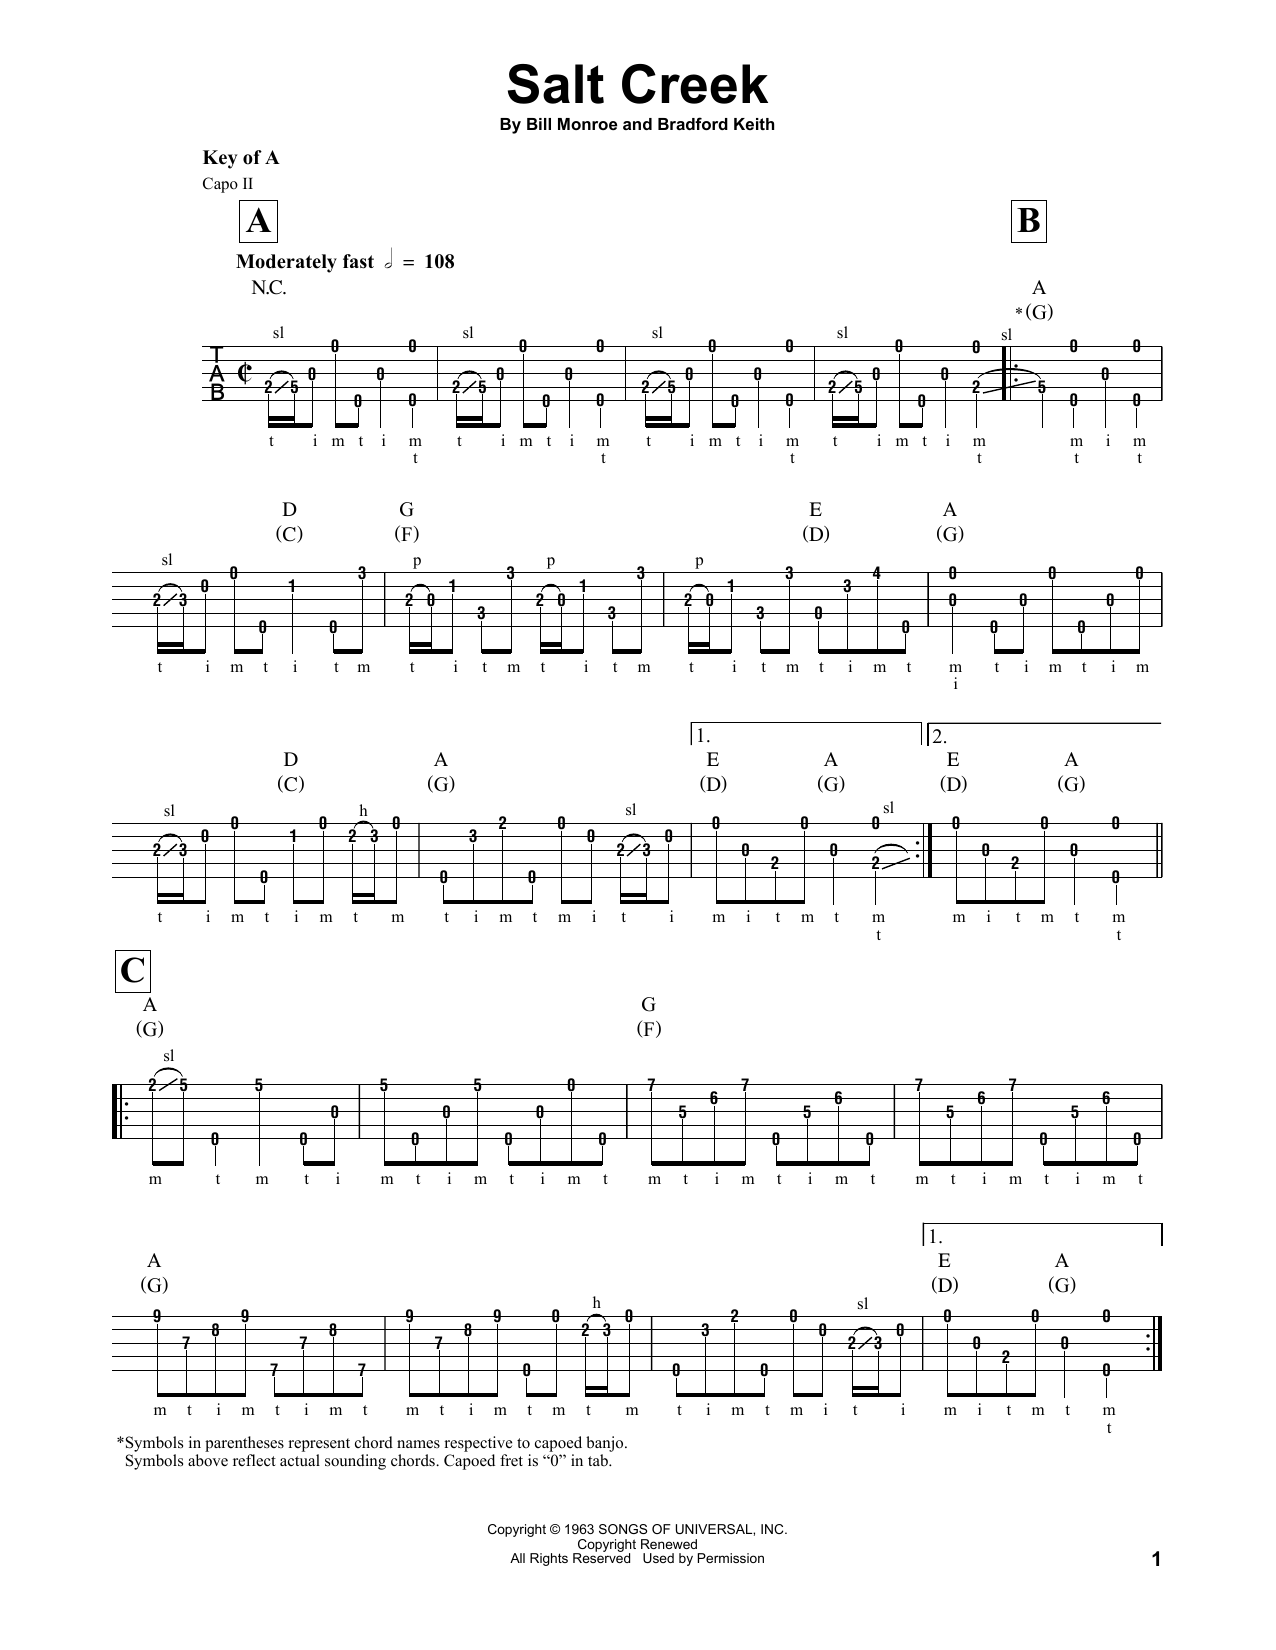 Download Bill Monroe Salt Creek Sheet Music and learn how to play Banjo PDF digital score in minutes